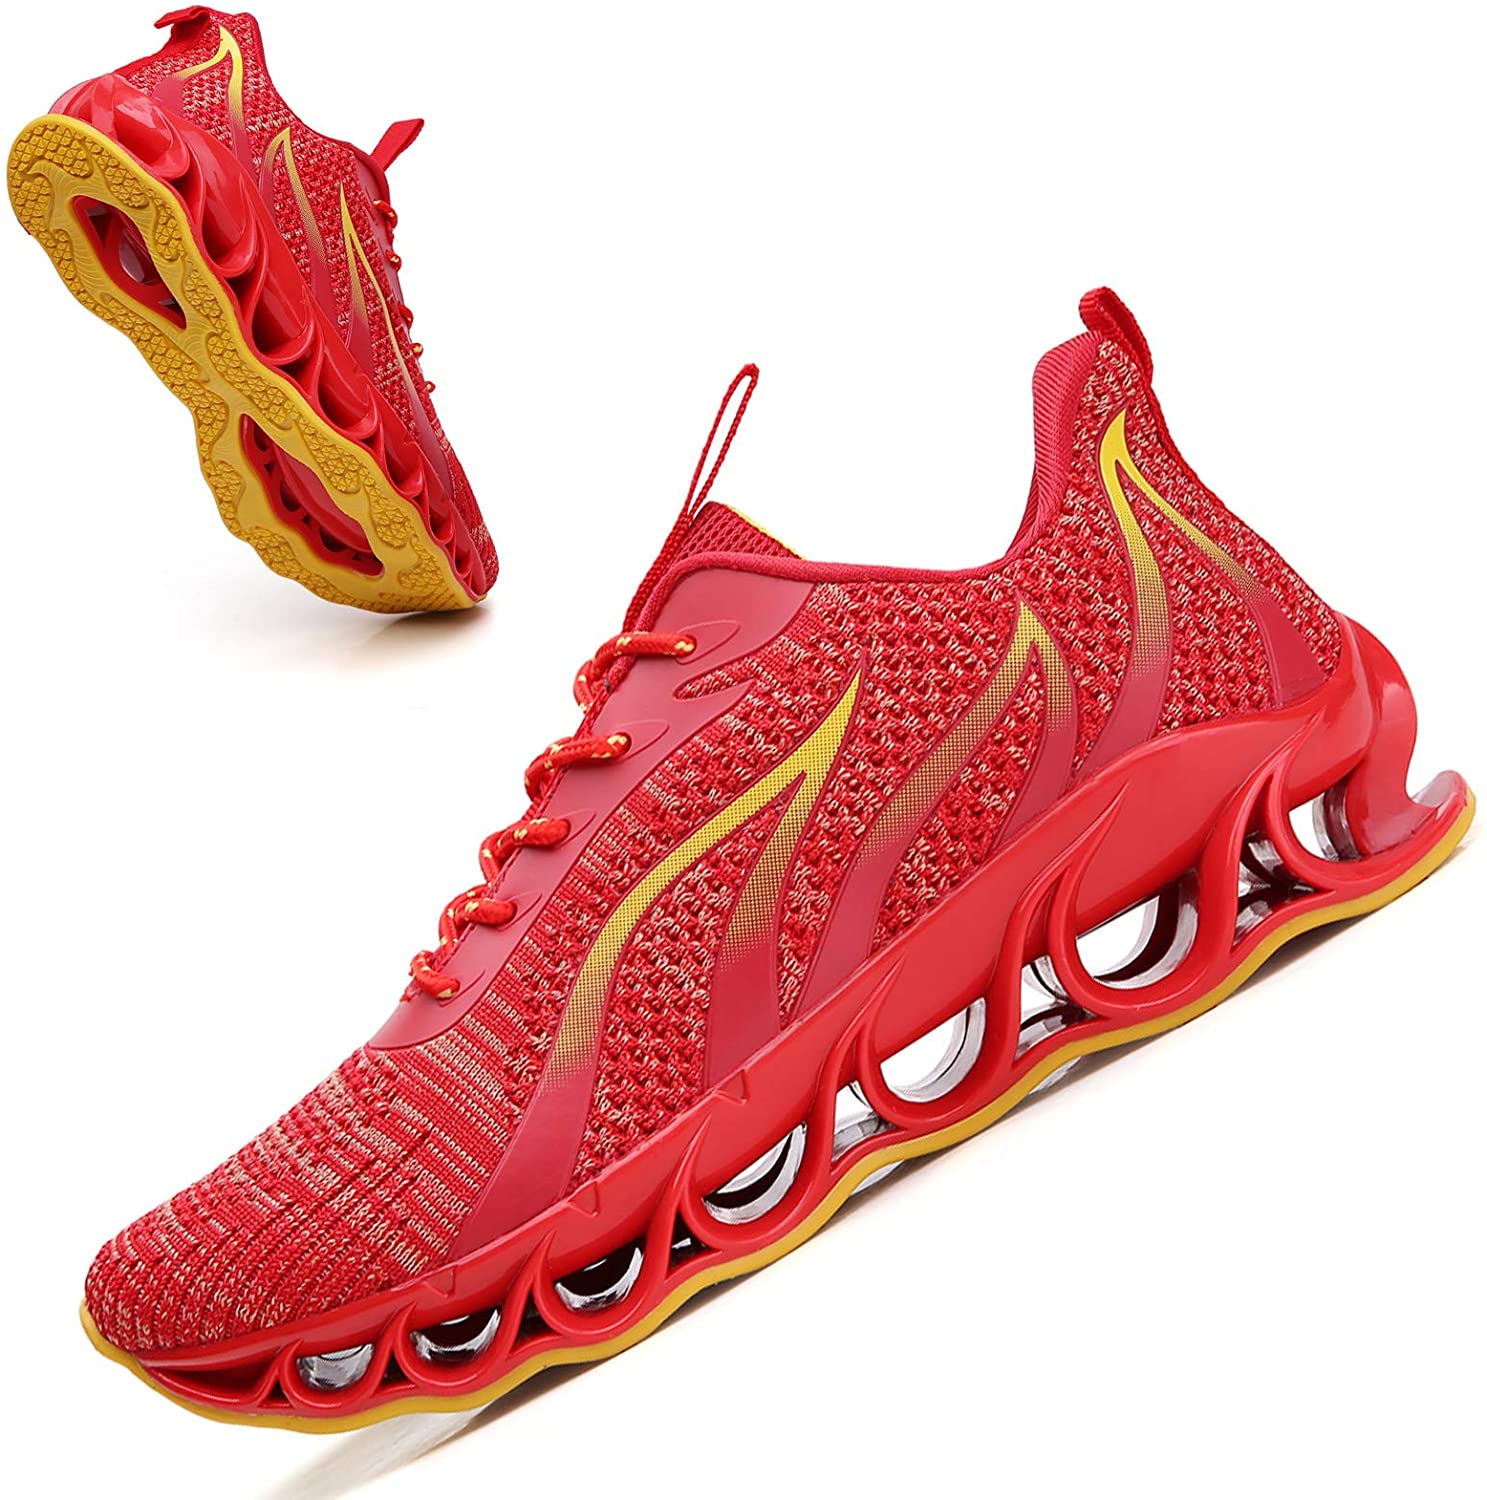 wanhee Men's Sneakers Athletic Sport Running Shoes 